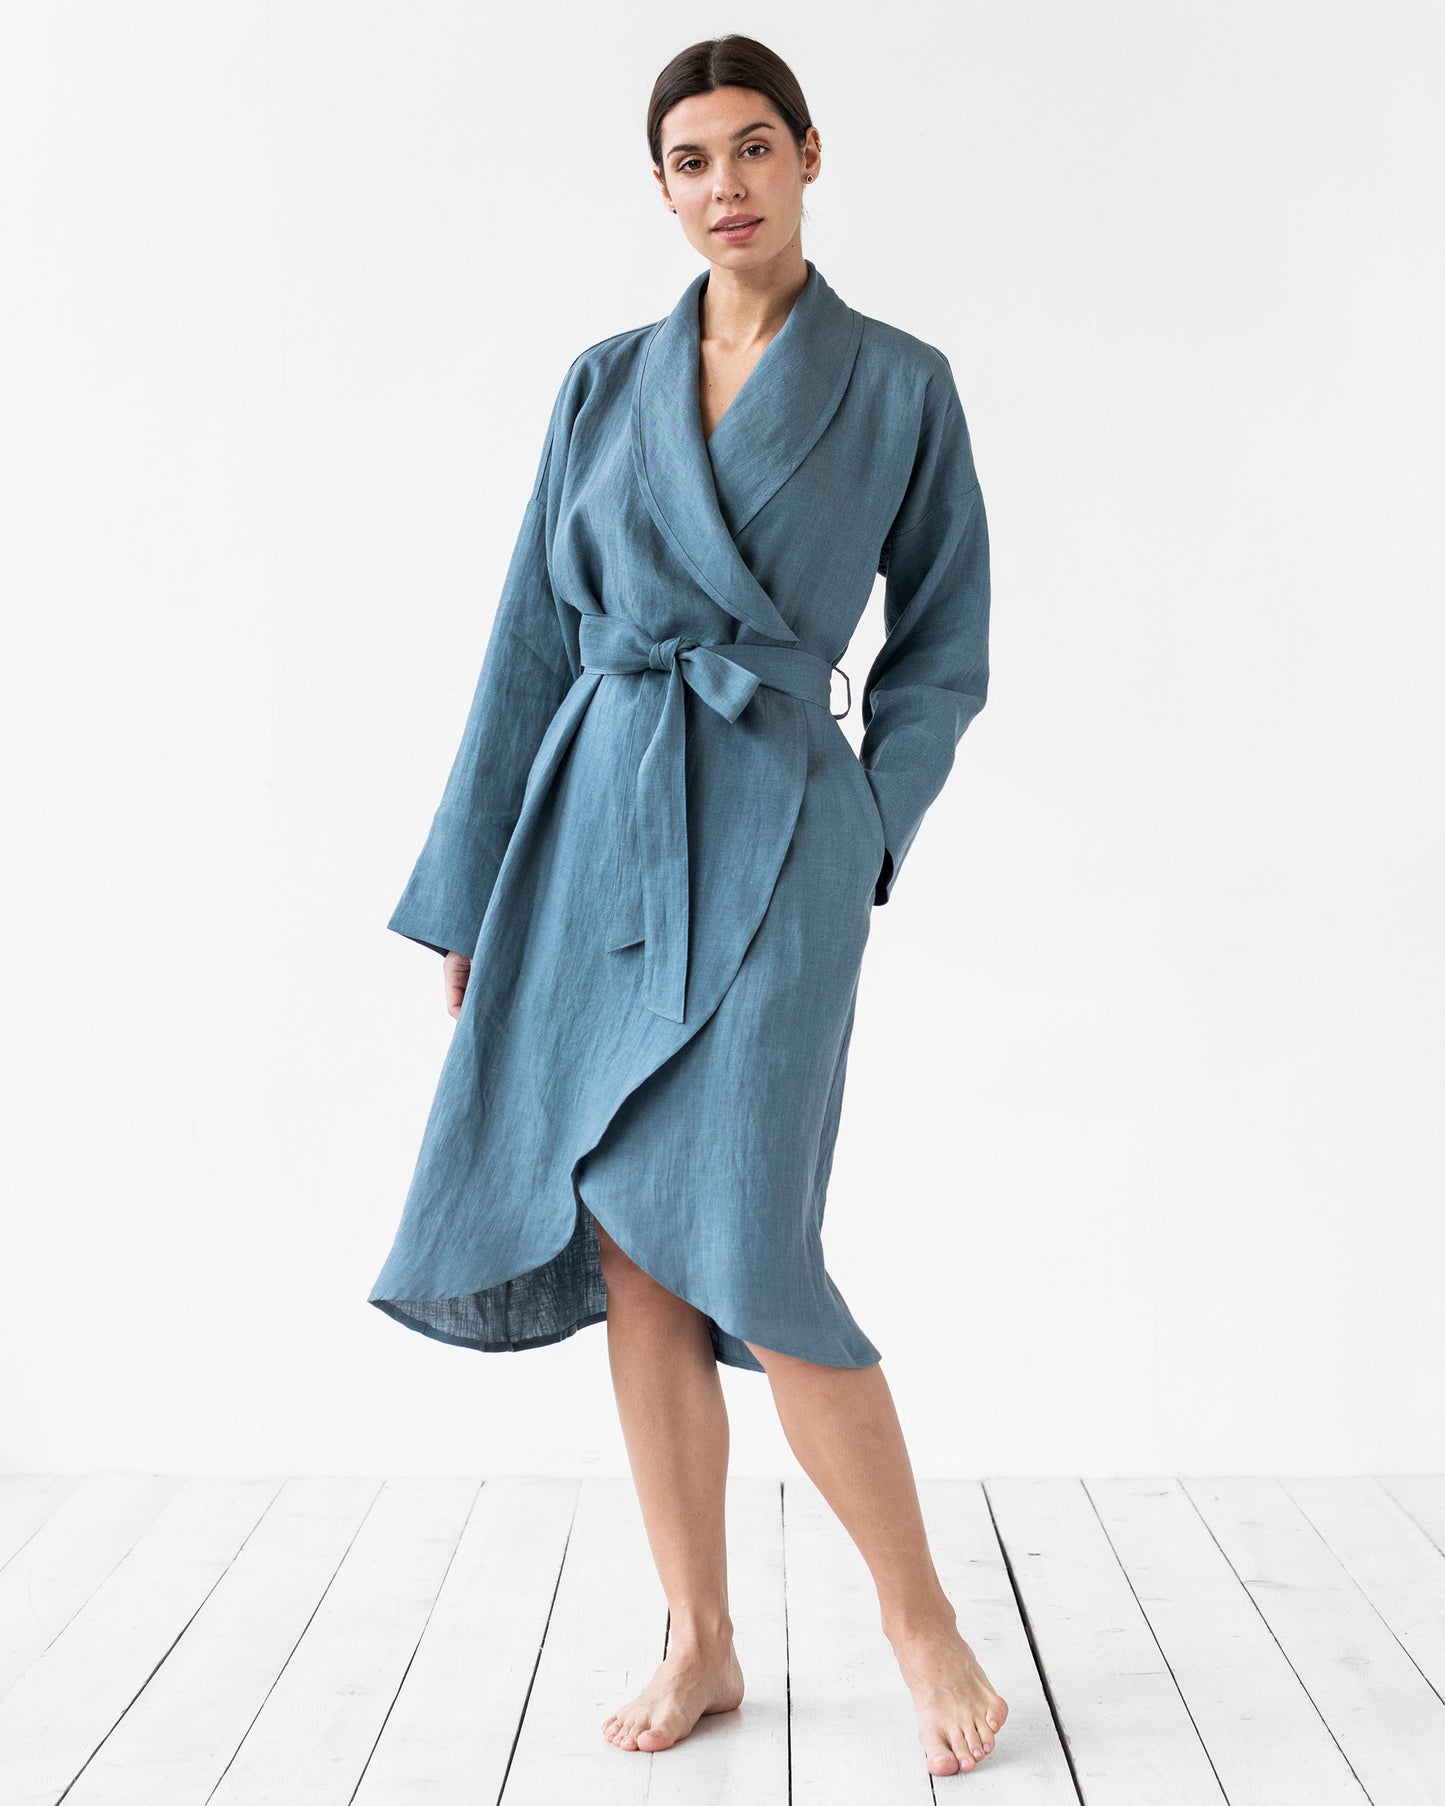 Linen robe in Gray blue - MagicLinen